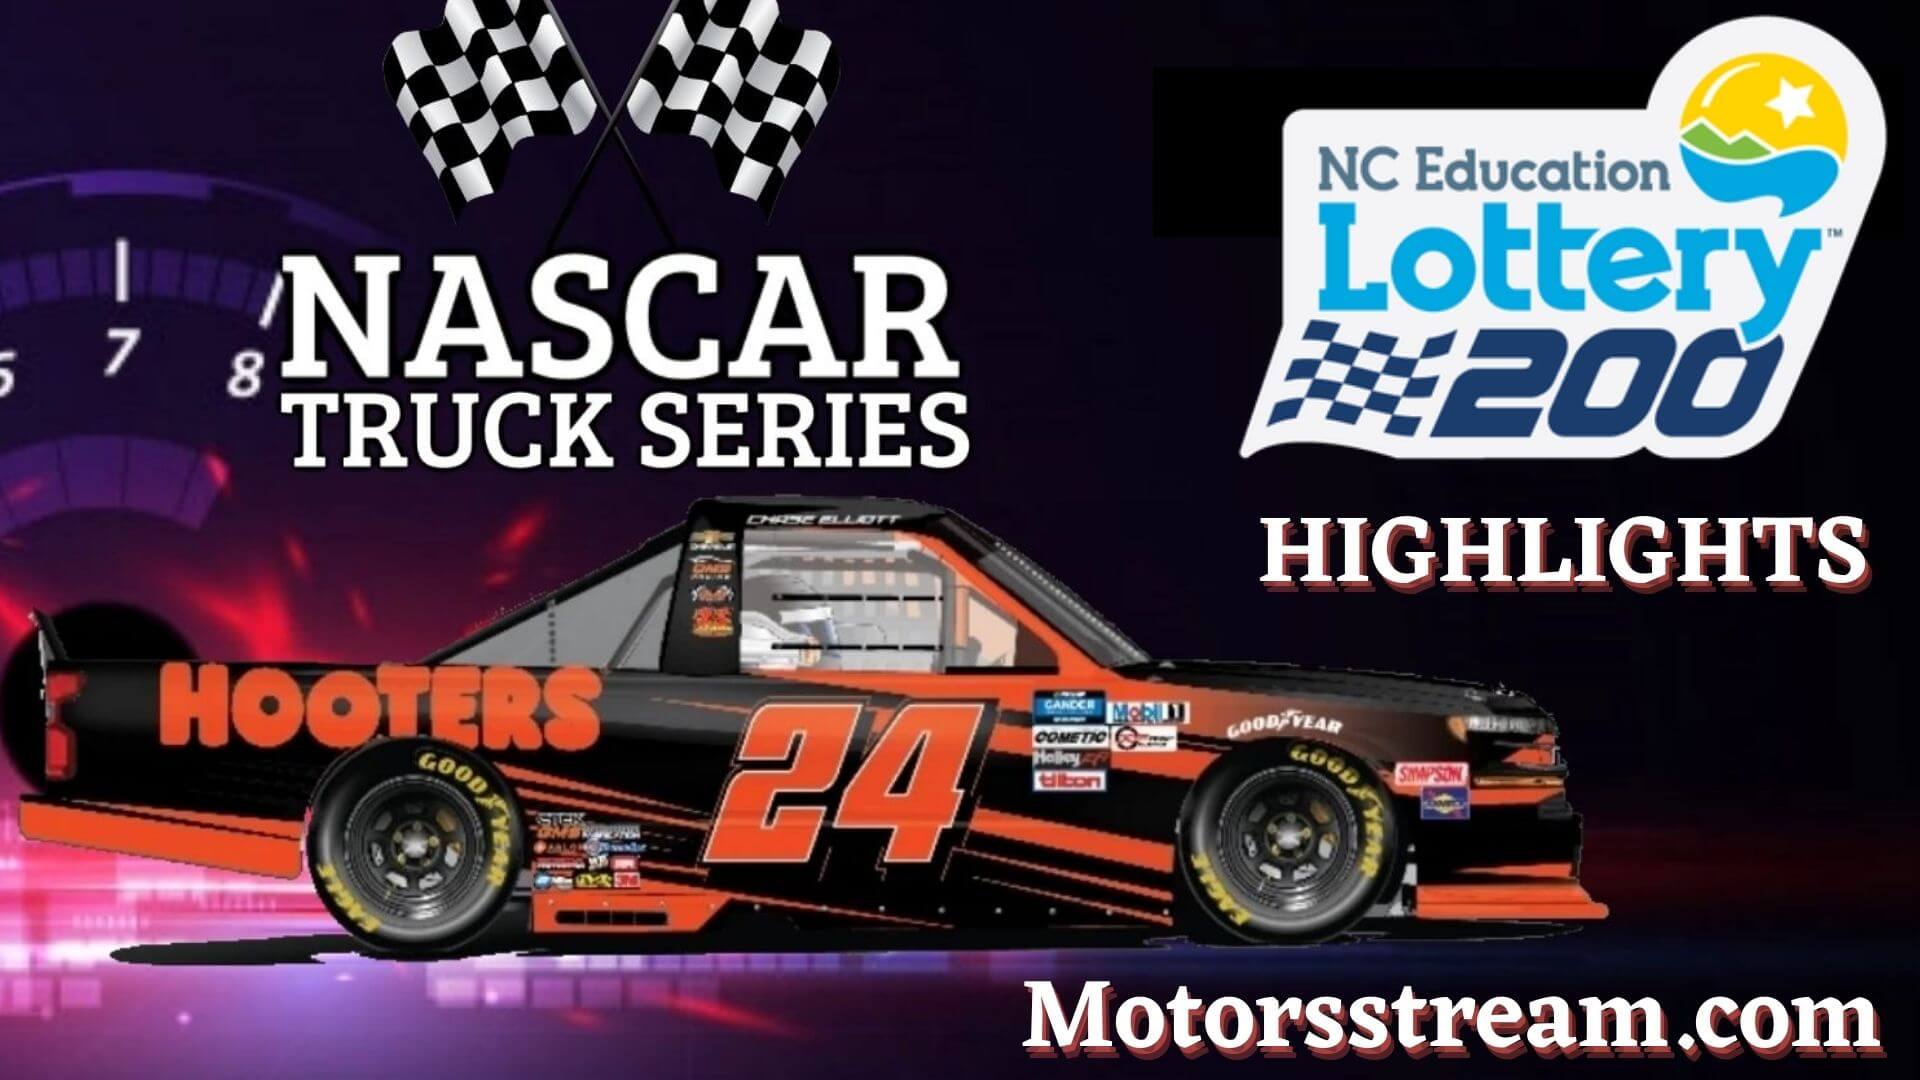 NASCAR Education Lottery 200 Highlights 2021 Truck Series